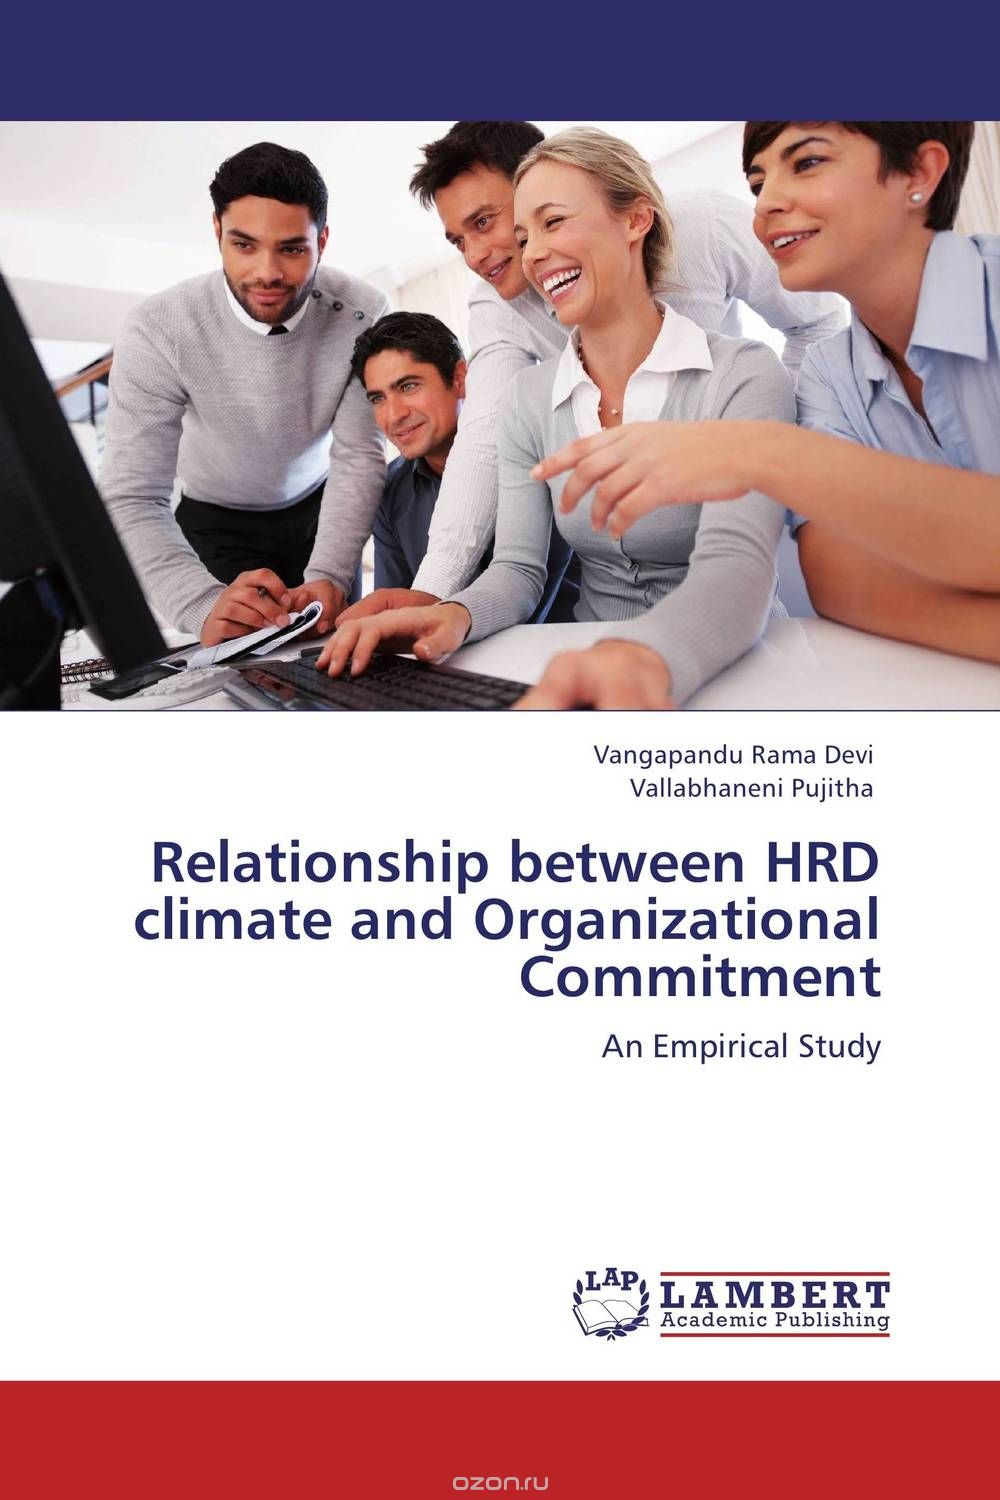 Скачать книгу "Relationship between HRD climate and Organizational Commitment"